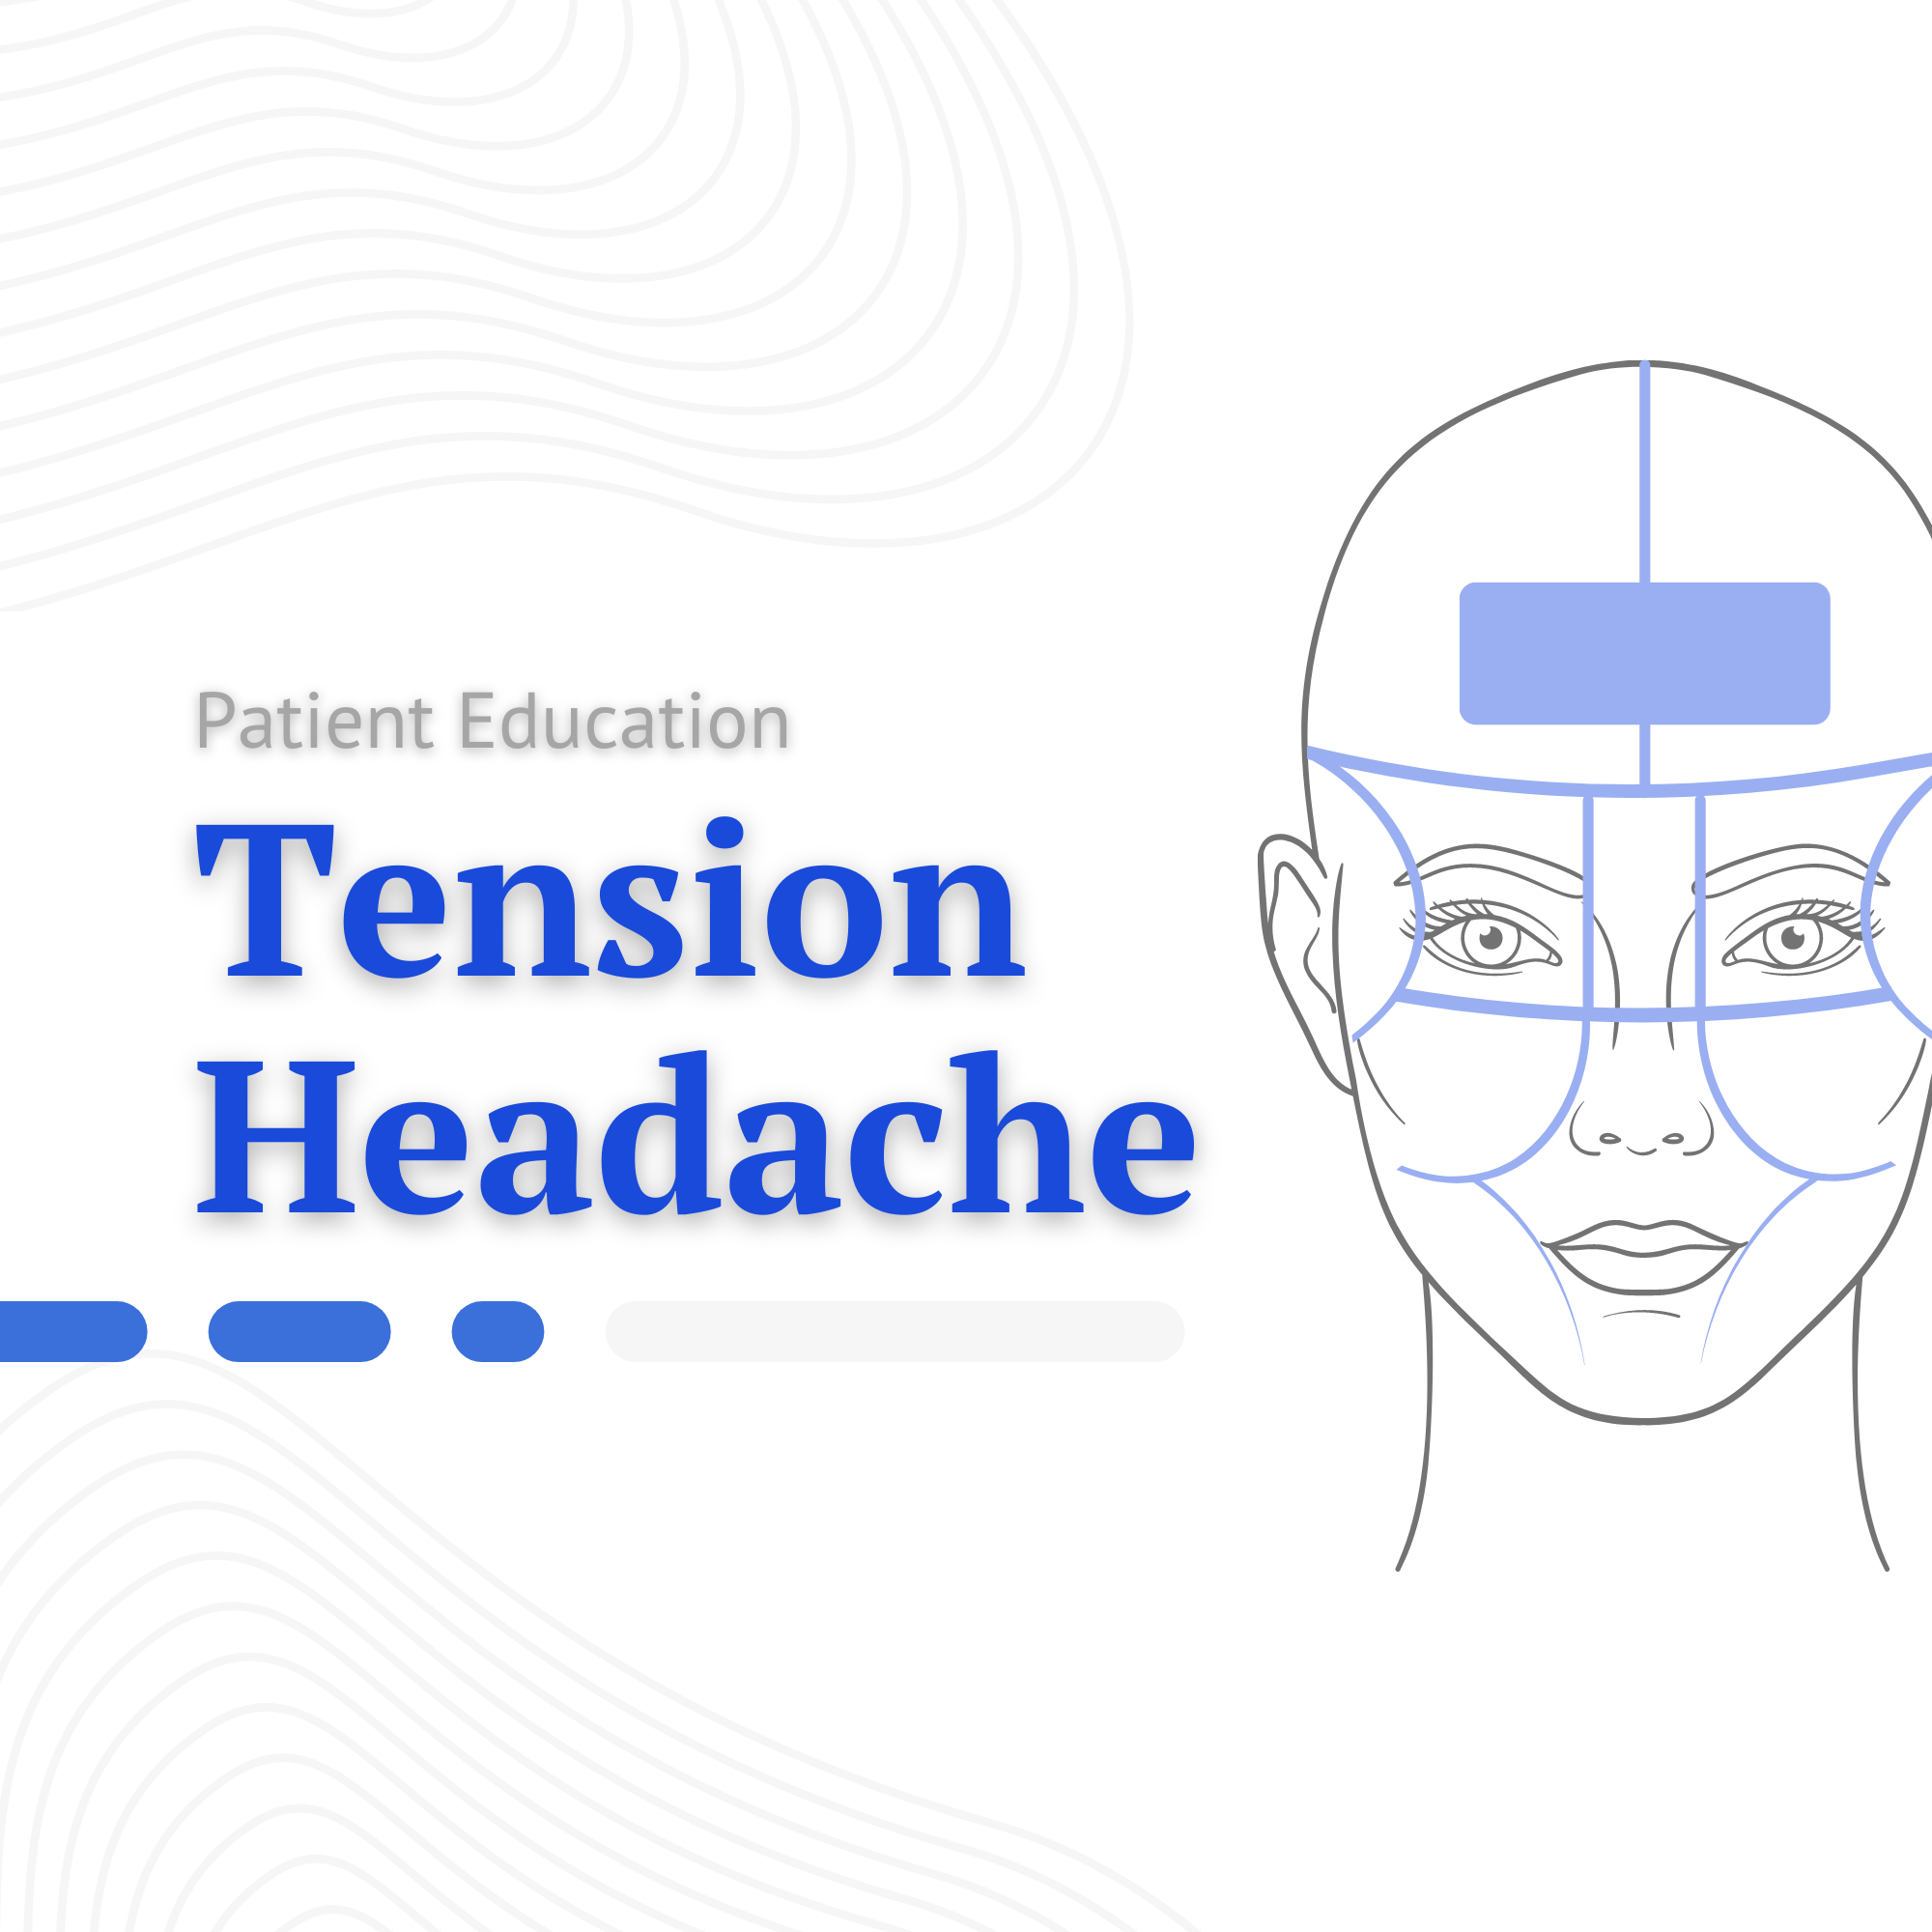 Tension Headache Cover Photo.png